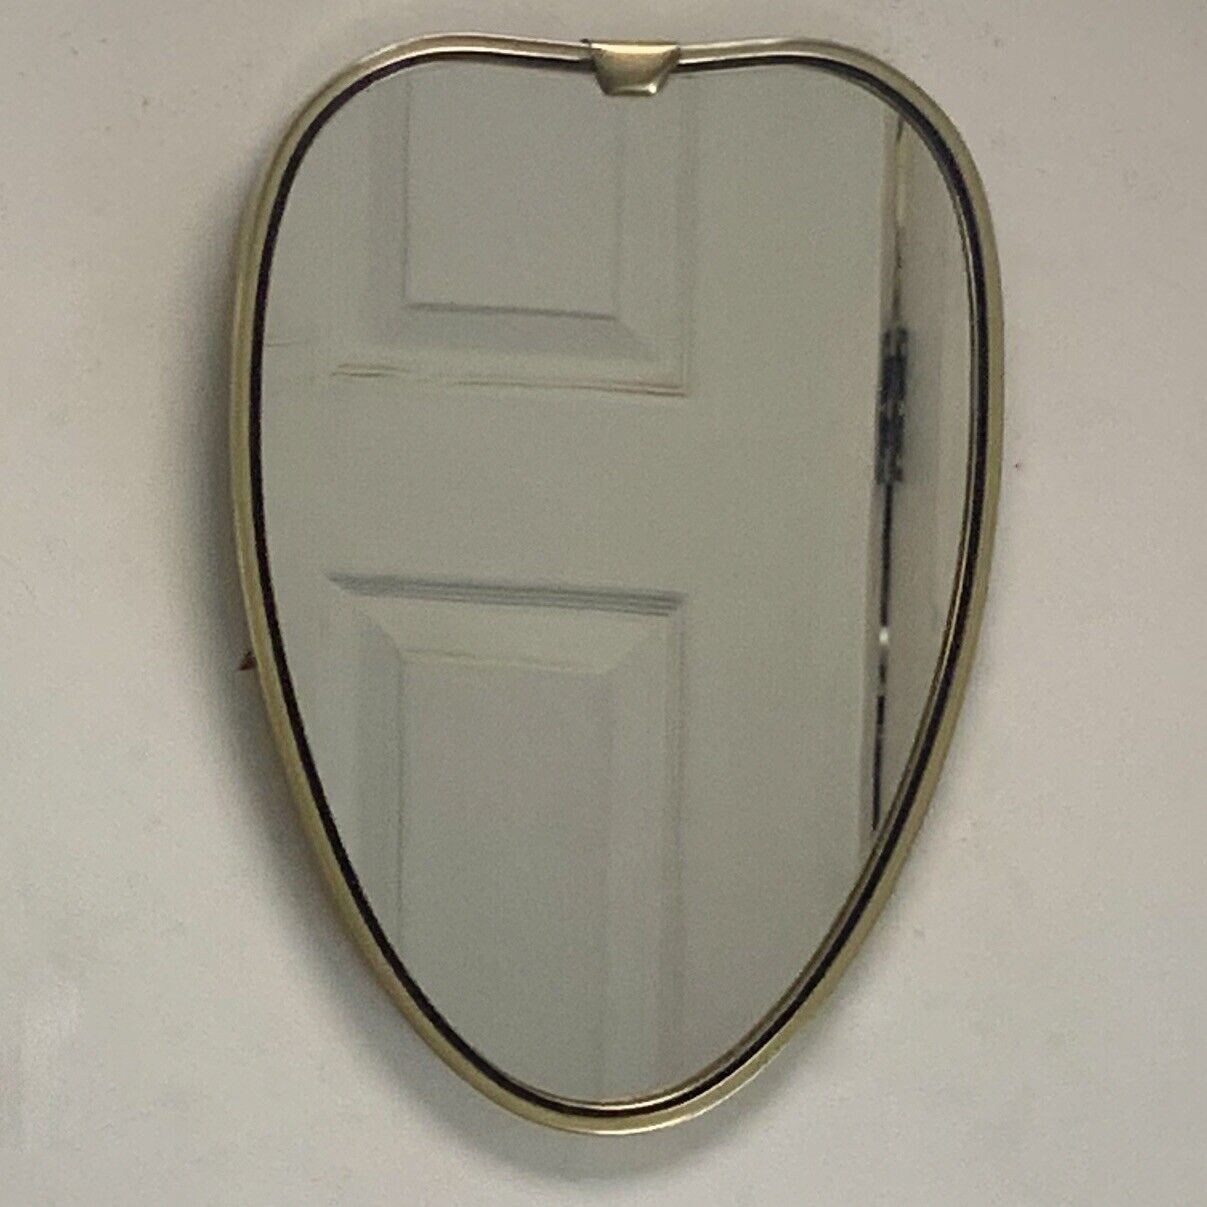 60s Gold Rimmed Mirror  30x21 cm